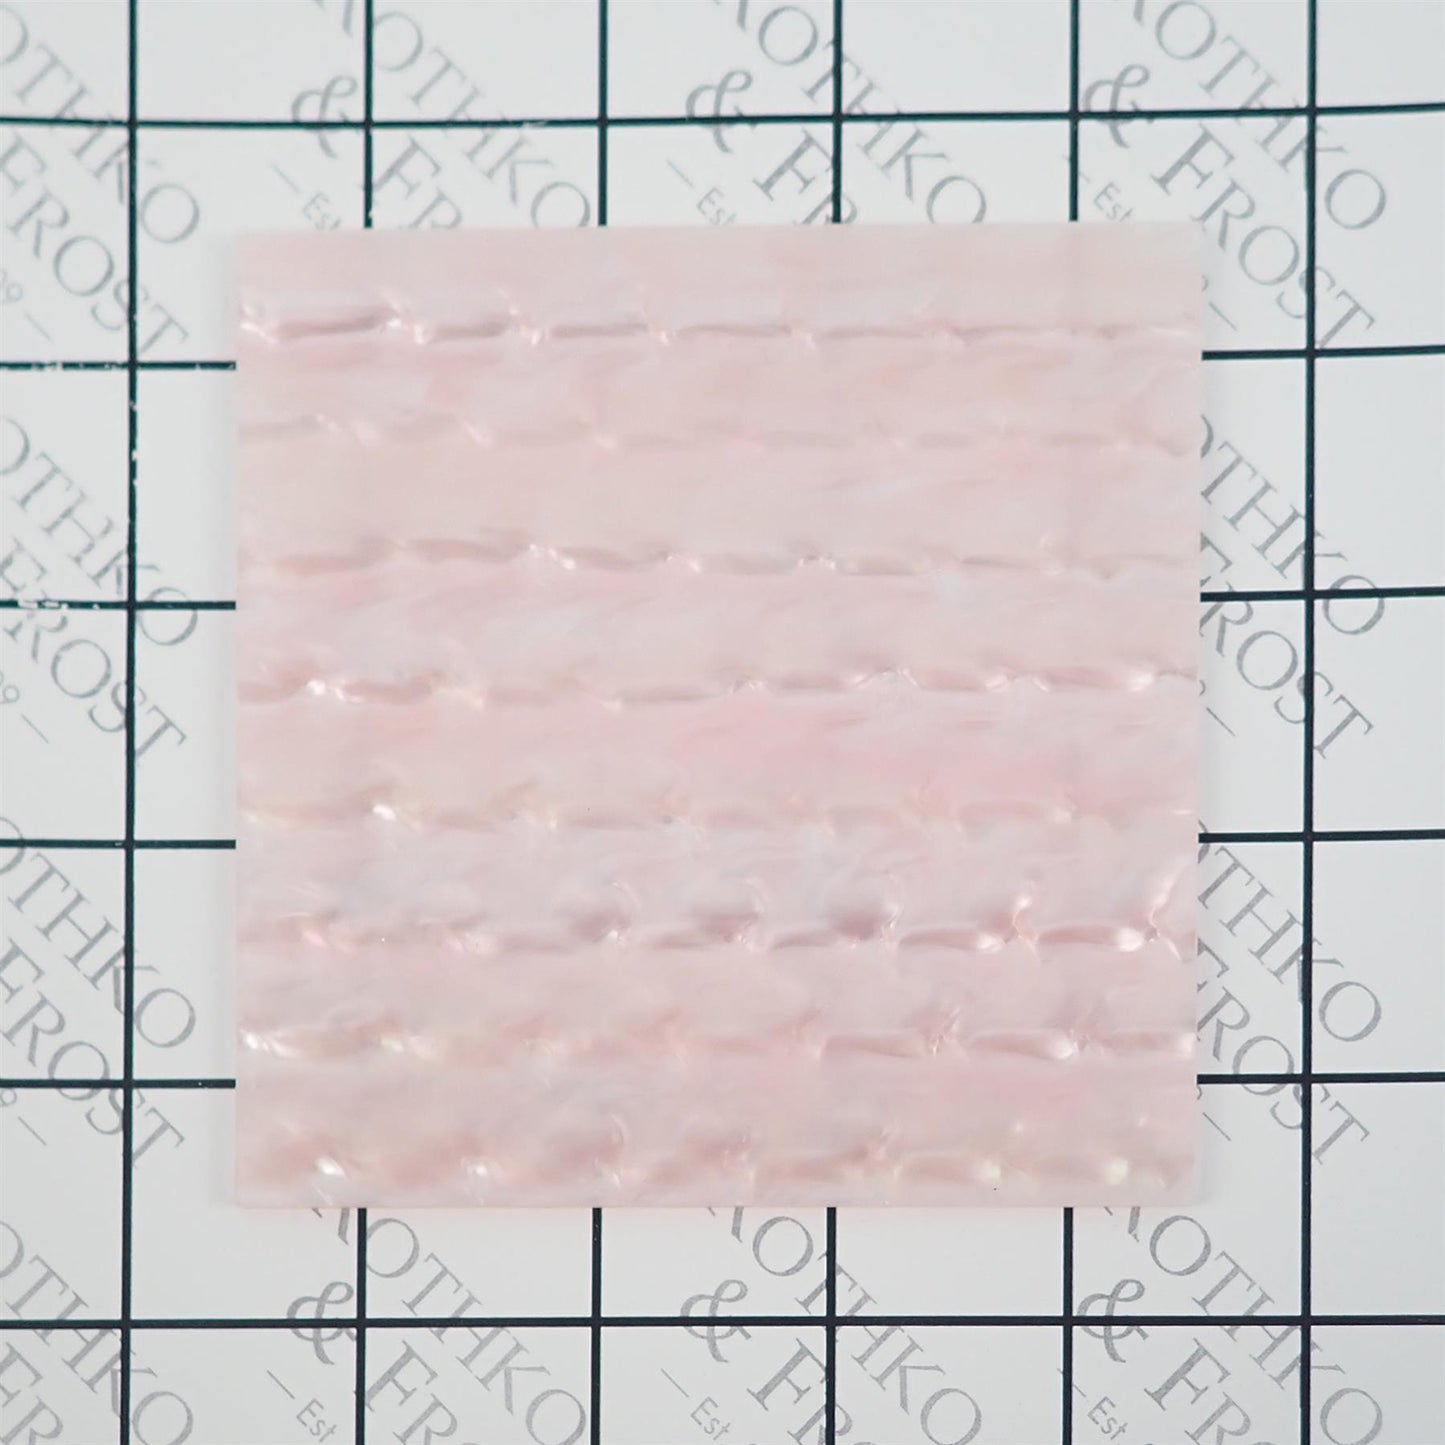 Incudo Light Pink Snakeskin Acrylic Sheet - 500x300x3mm